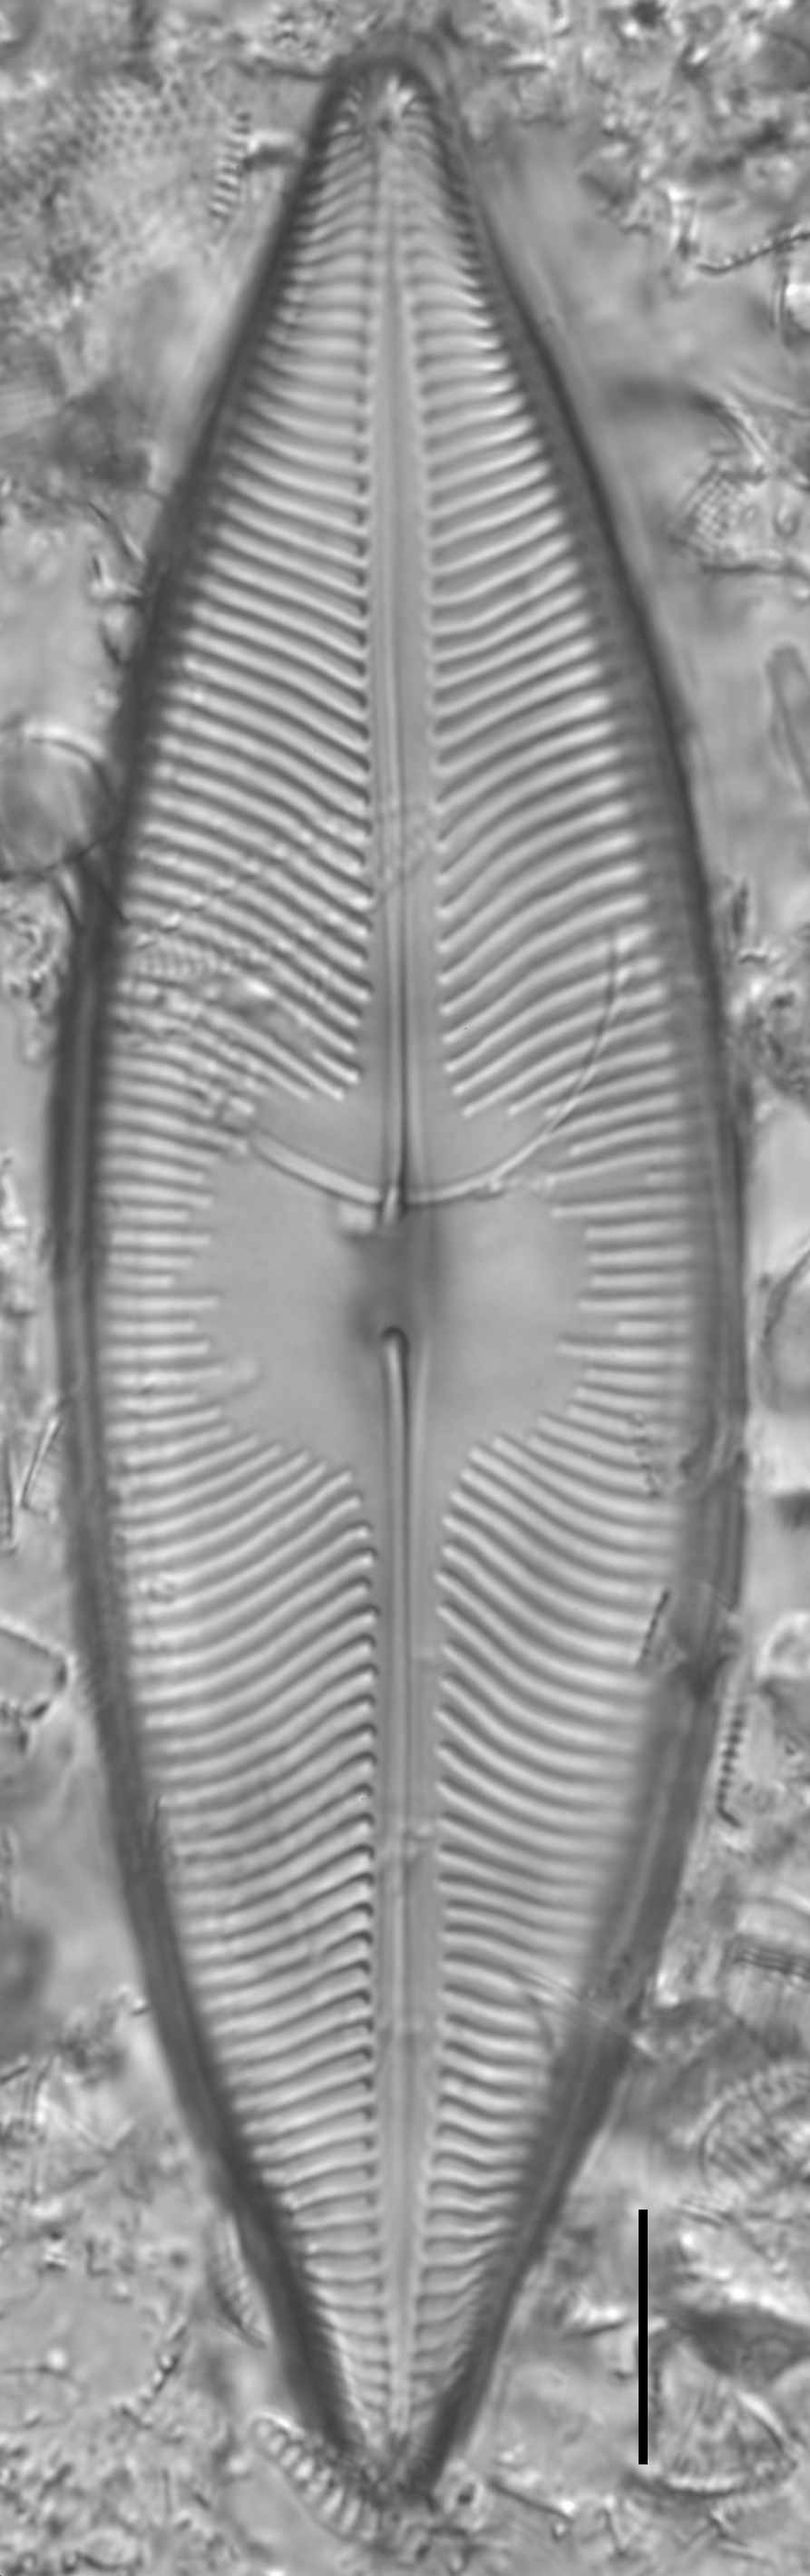 Pinnunavis elegans LM5